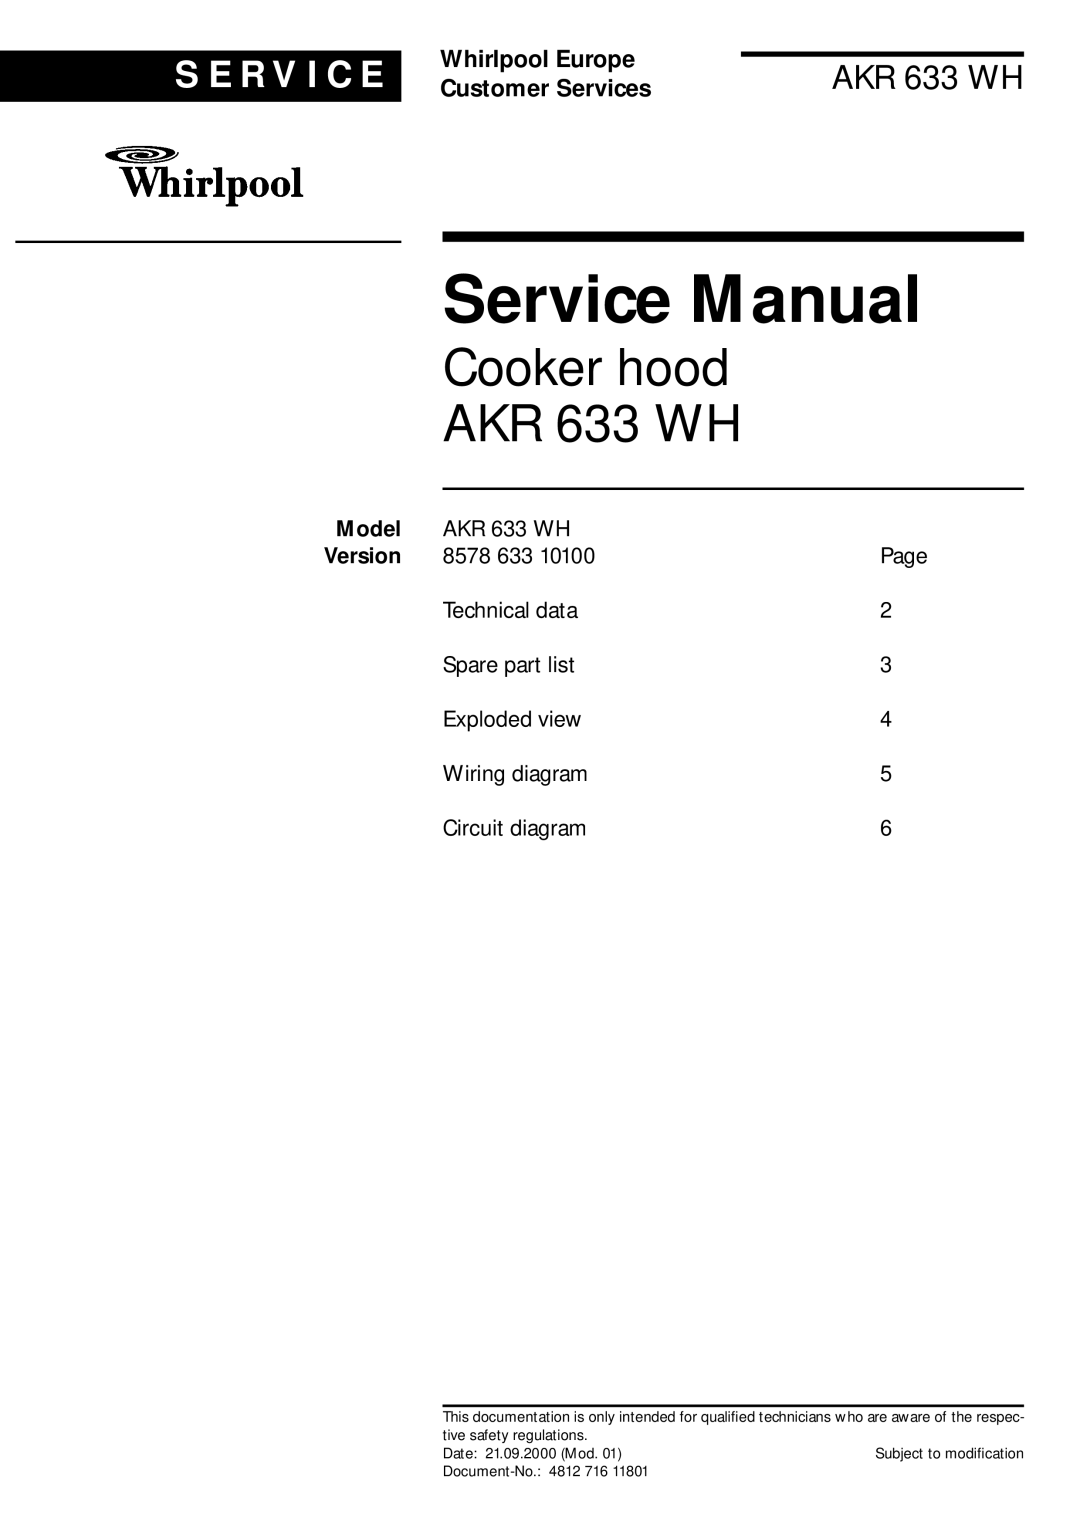 Whirlpool service manual Model, Cooker ACM 388 WH, S E R V I C E, Whirlpool Europe, Customer Services 